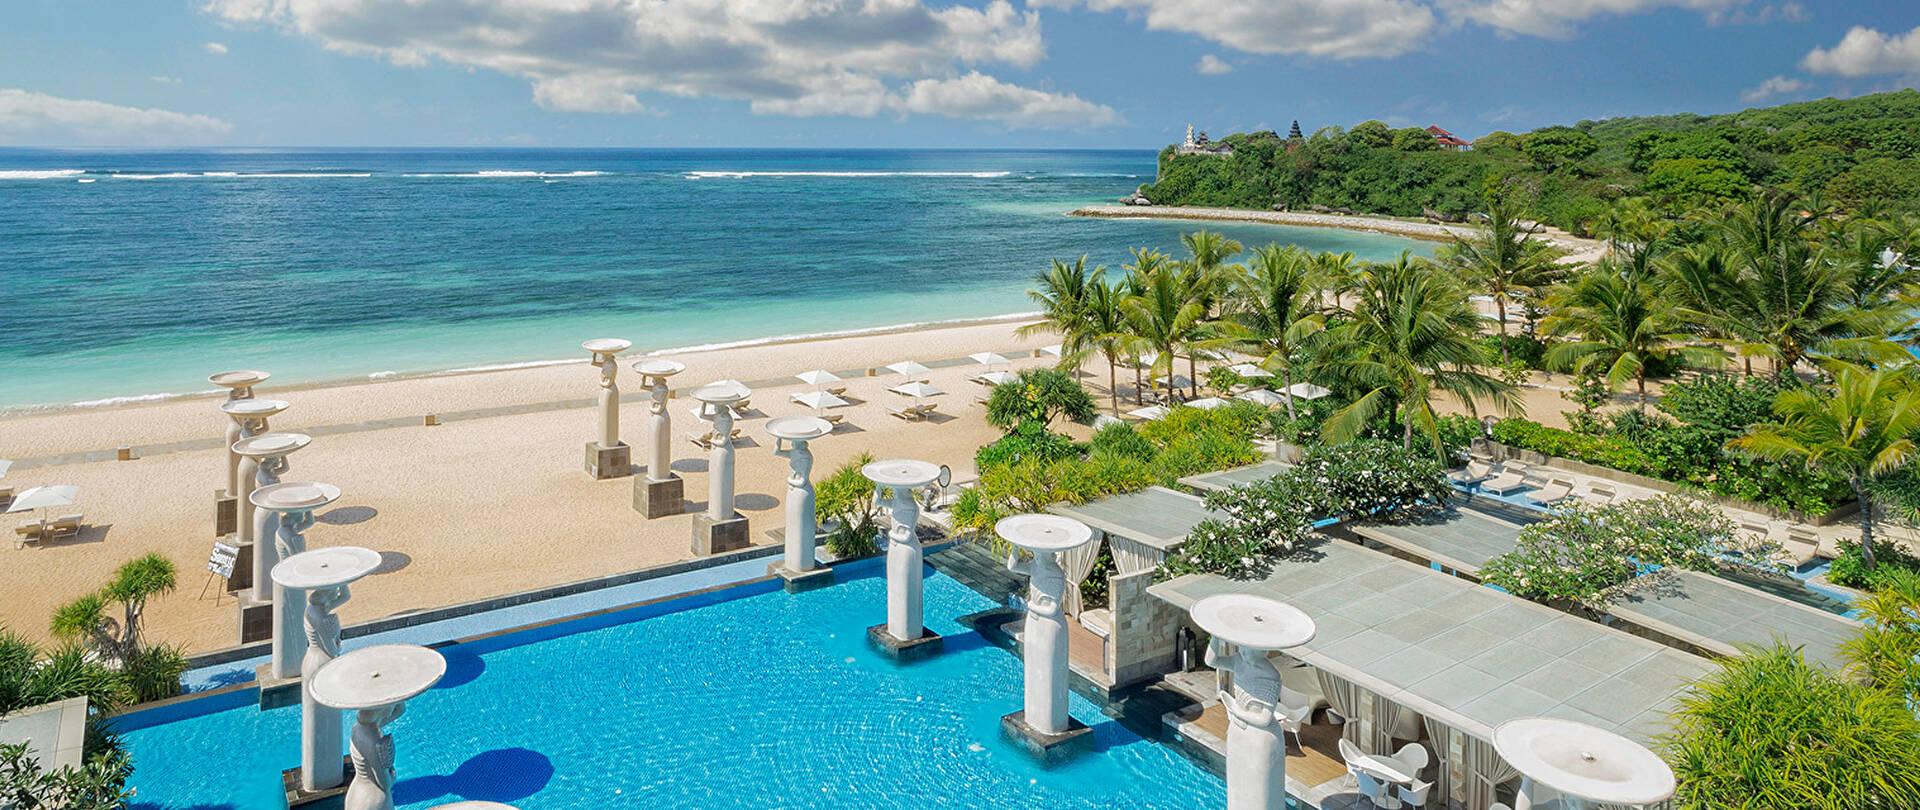 Piadina Romagnola | The Mulia, Mulia Resort & Villas - Nusa Dua, Bali